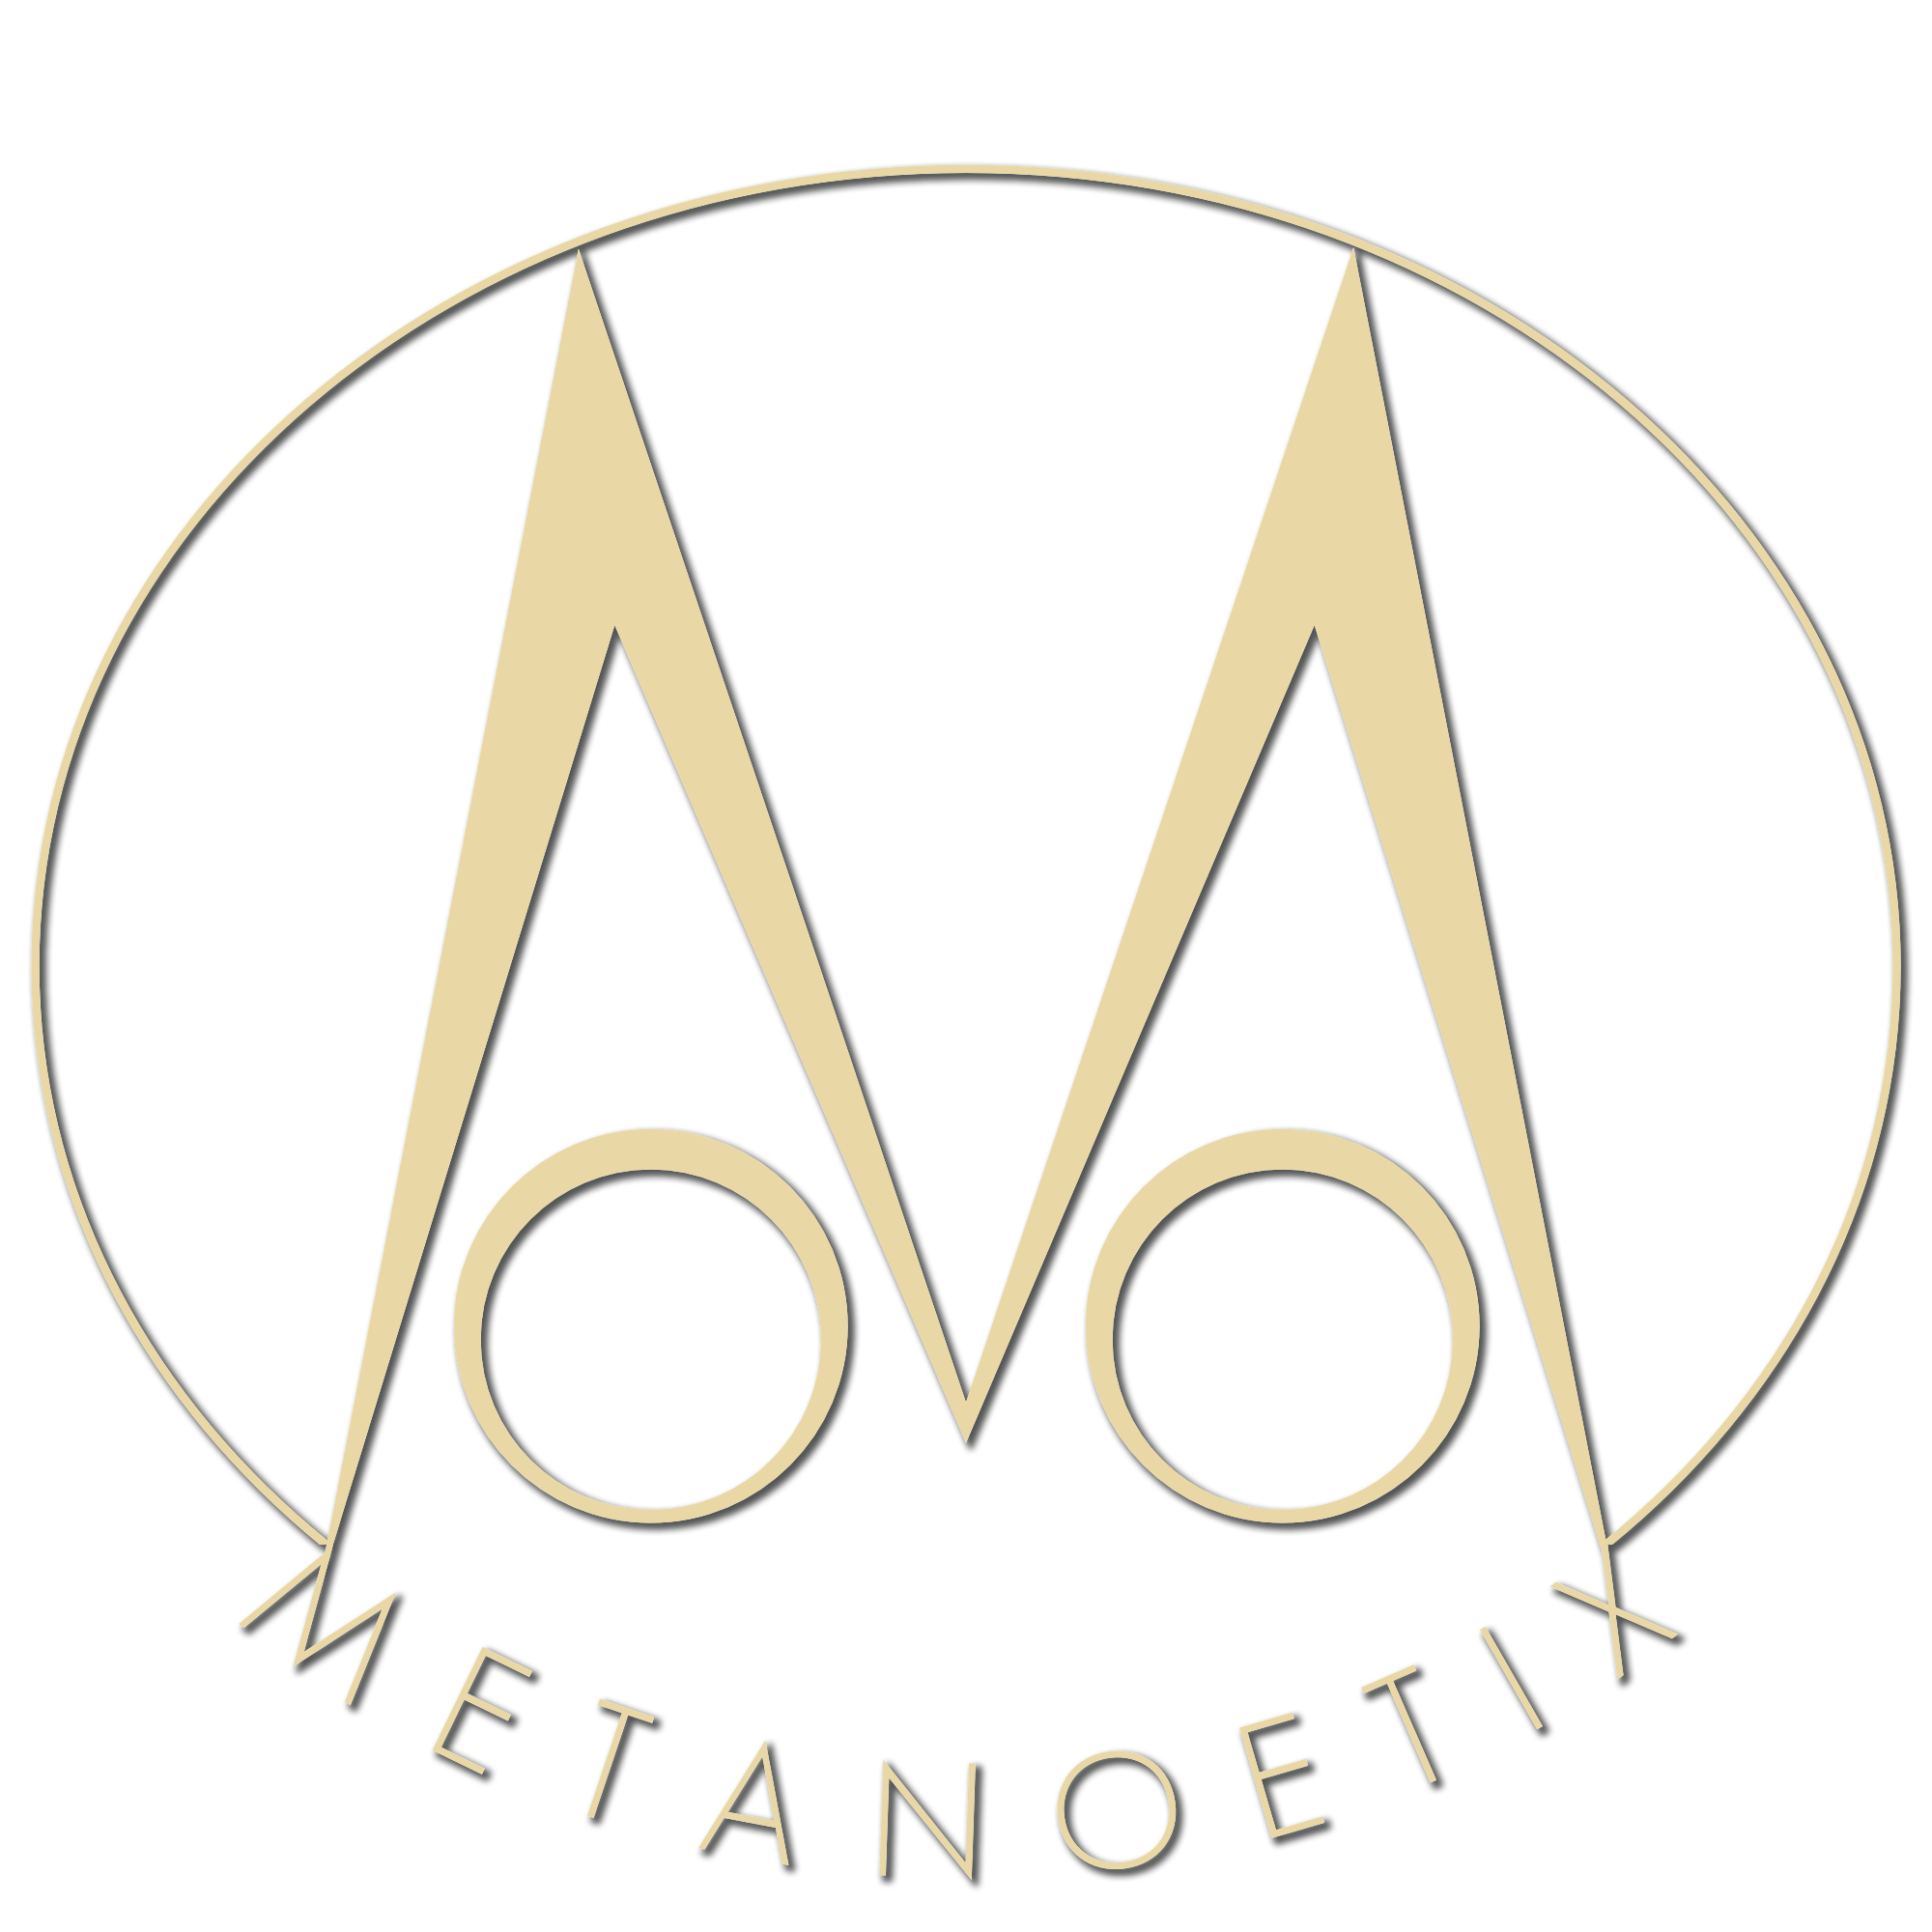 Metanoetix